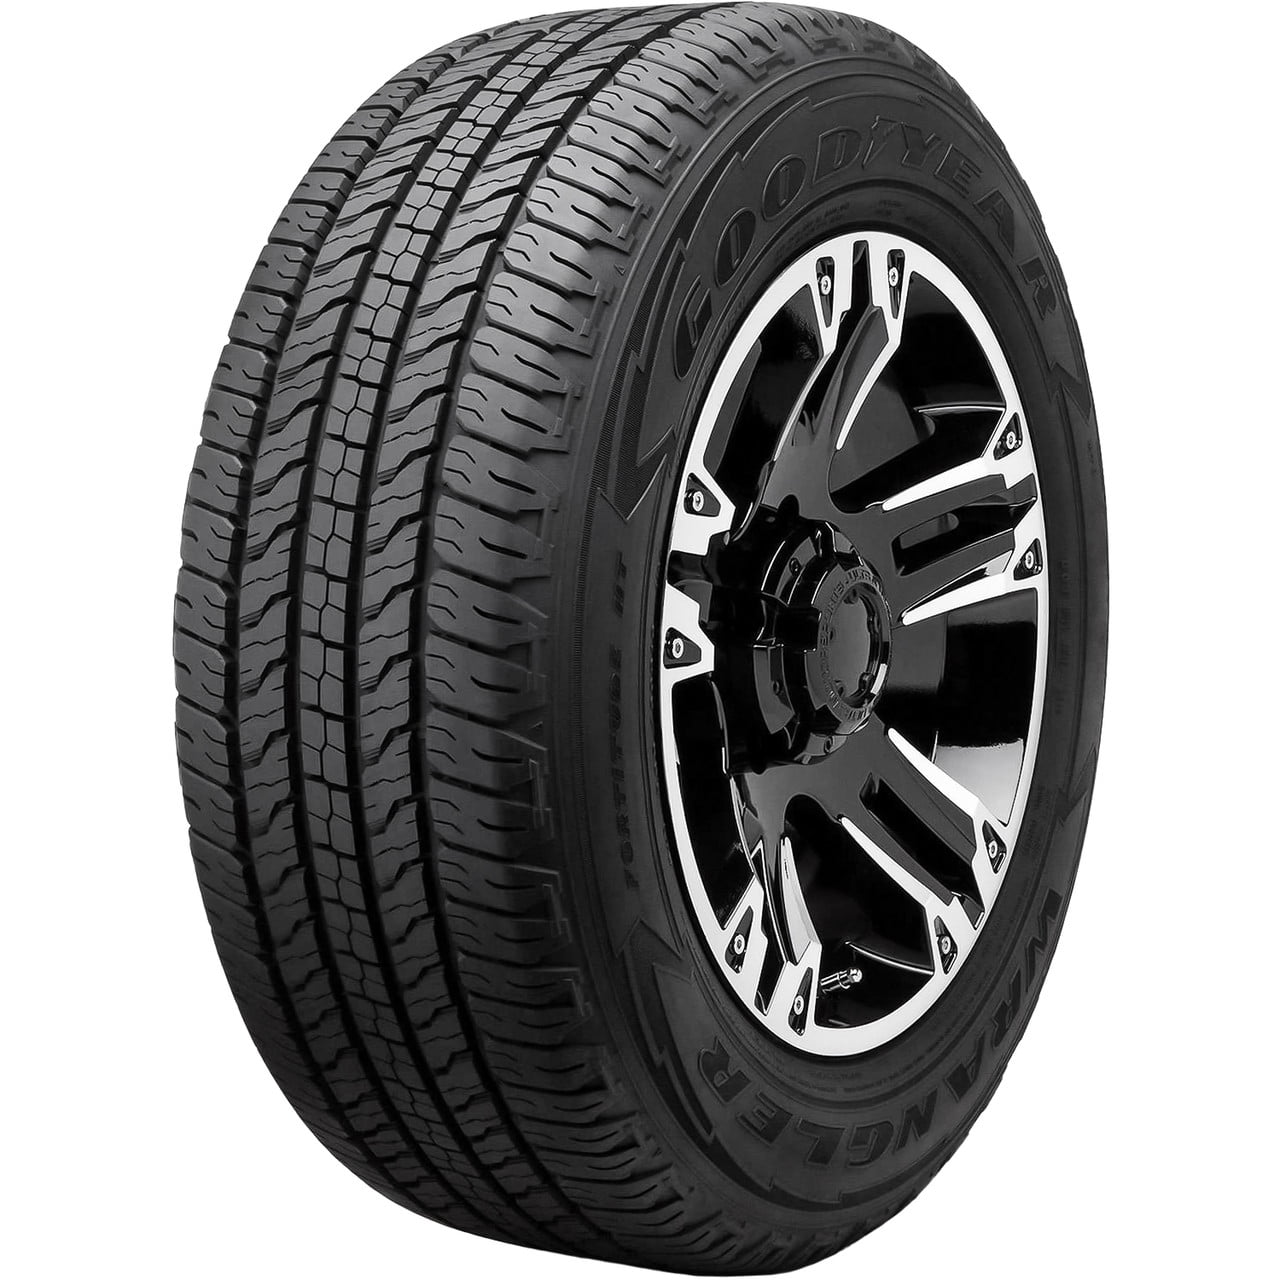 Pair Of 2 Goodyear Wrangler Fortitude HT All-Season Tires - 235/75R15 105T  